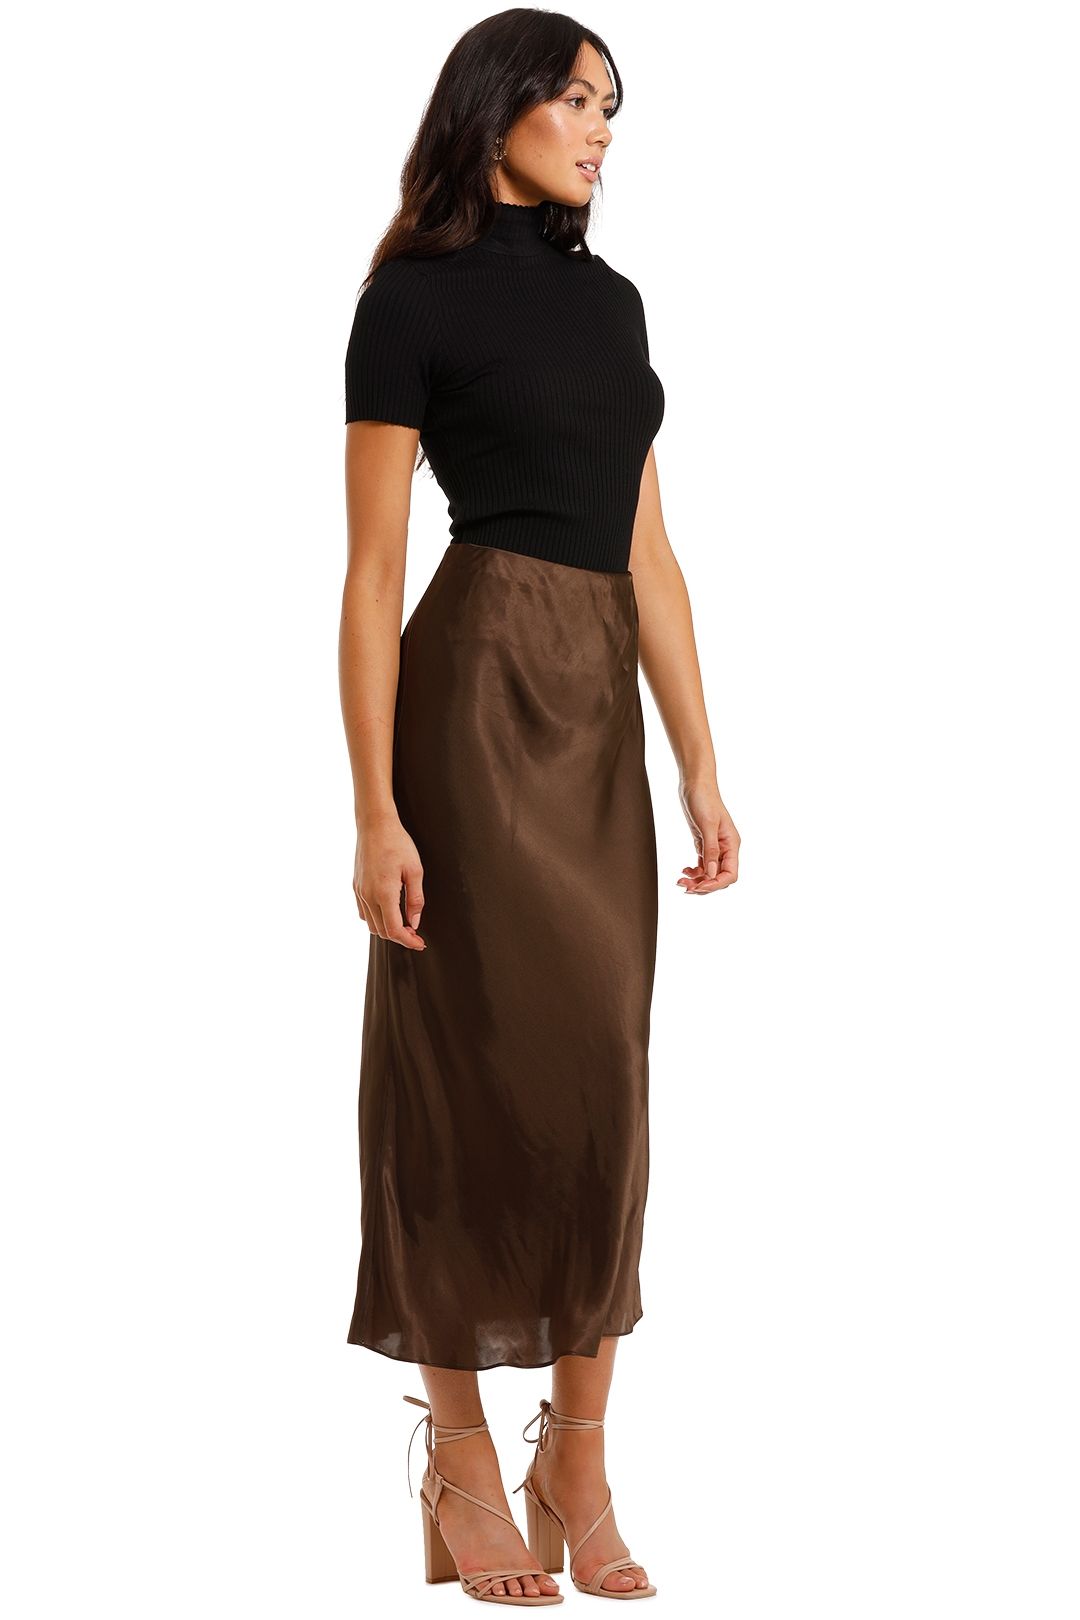 Elka Collective Versailles Skirt Brown Slip